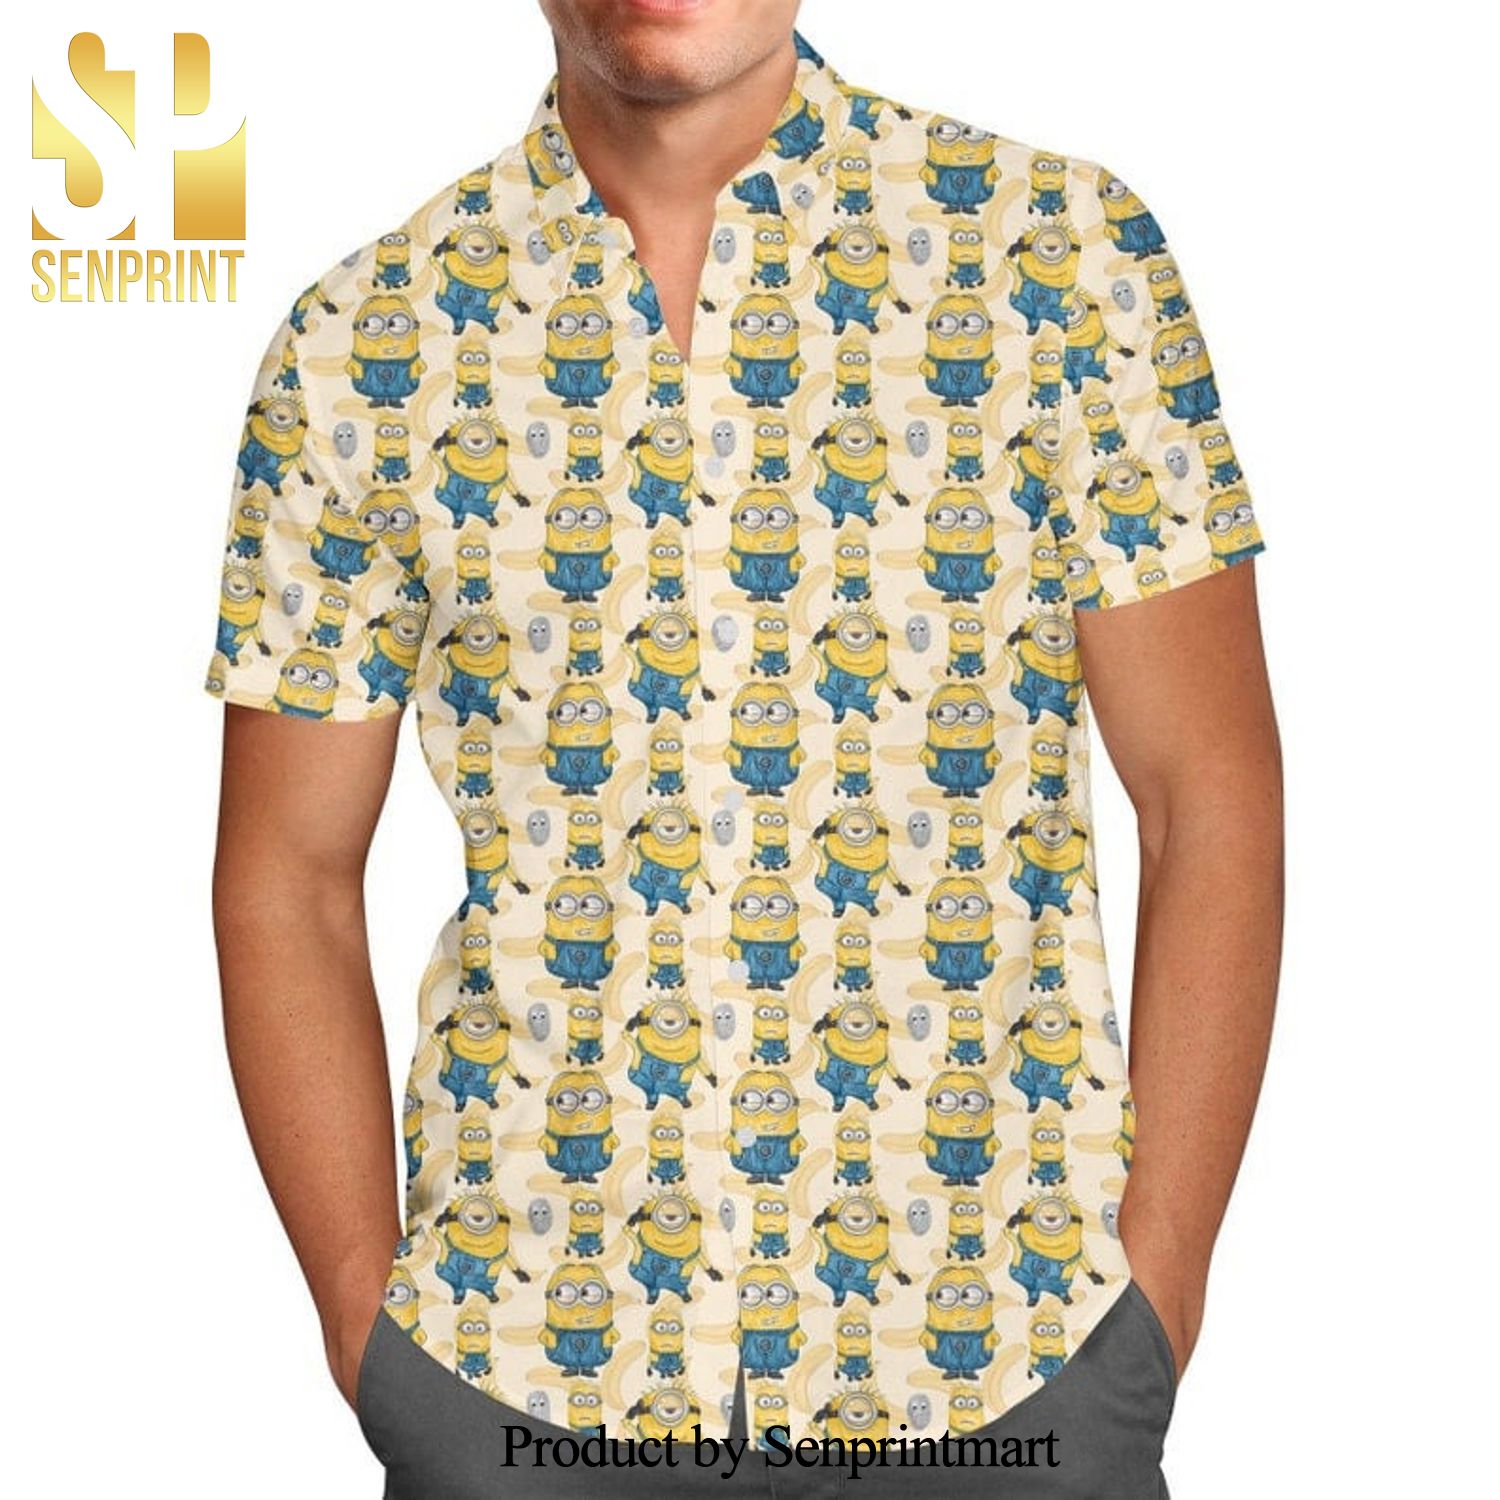 Minions Bananas Universal Studios Inspired Full Printing Hawaiian Shirt